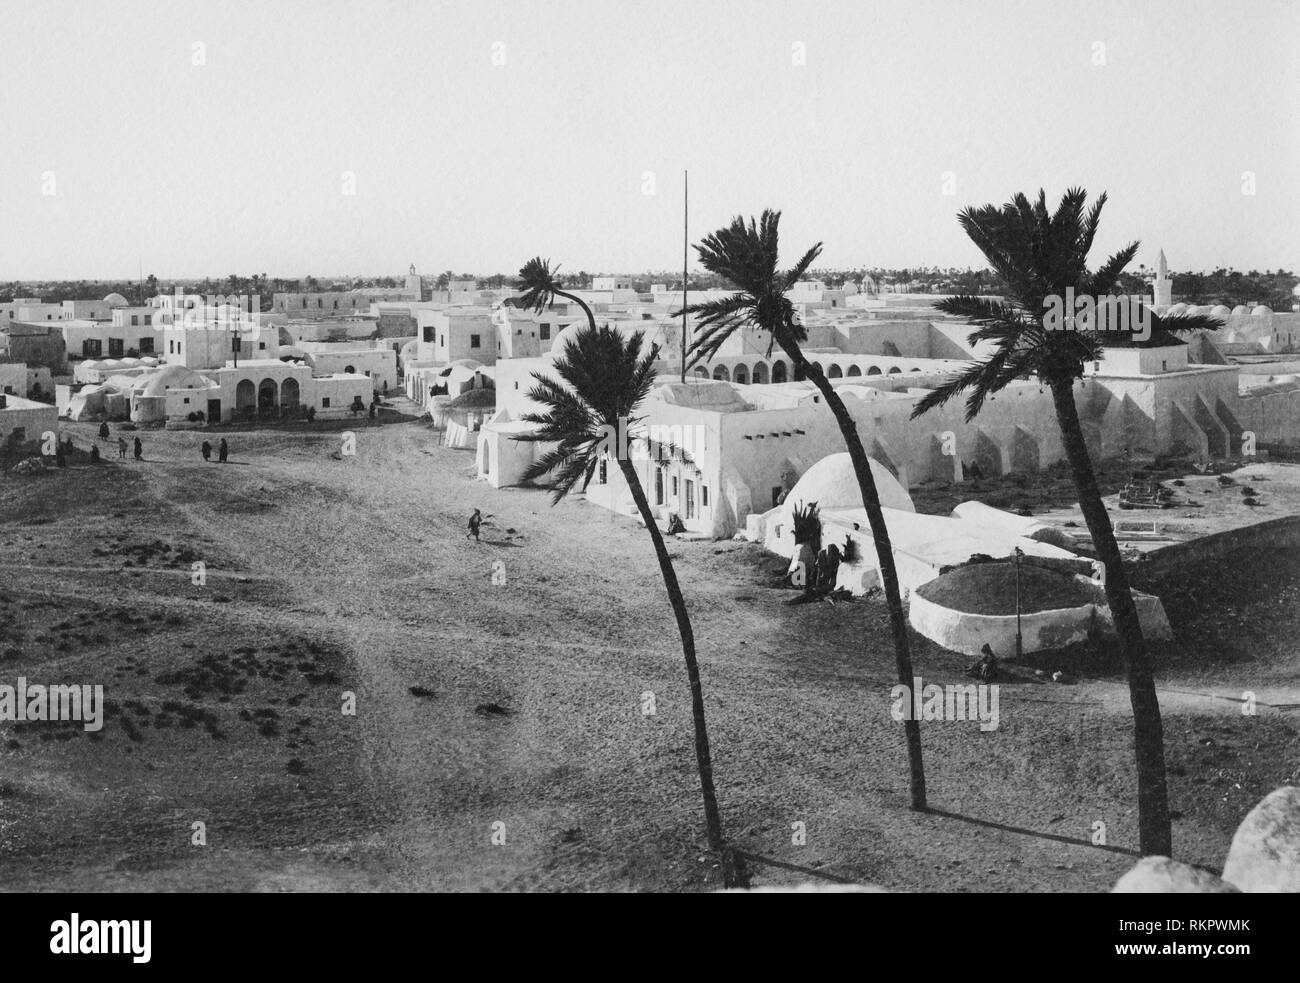 island of djerba, tunisia, africa 1910 Stock Photo